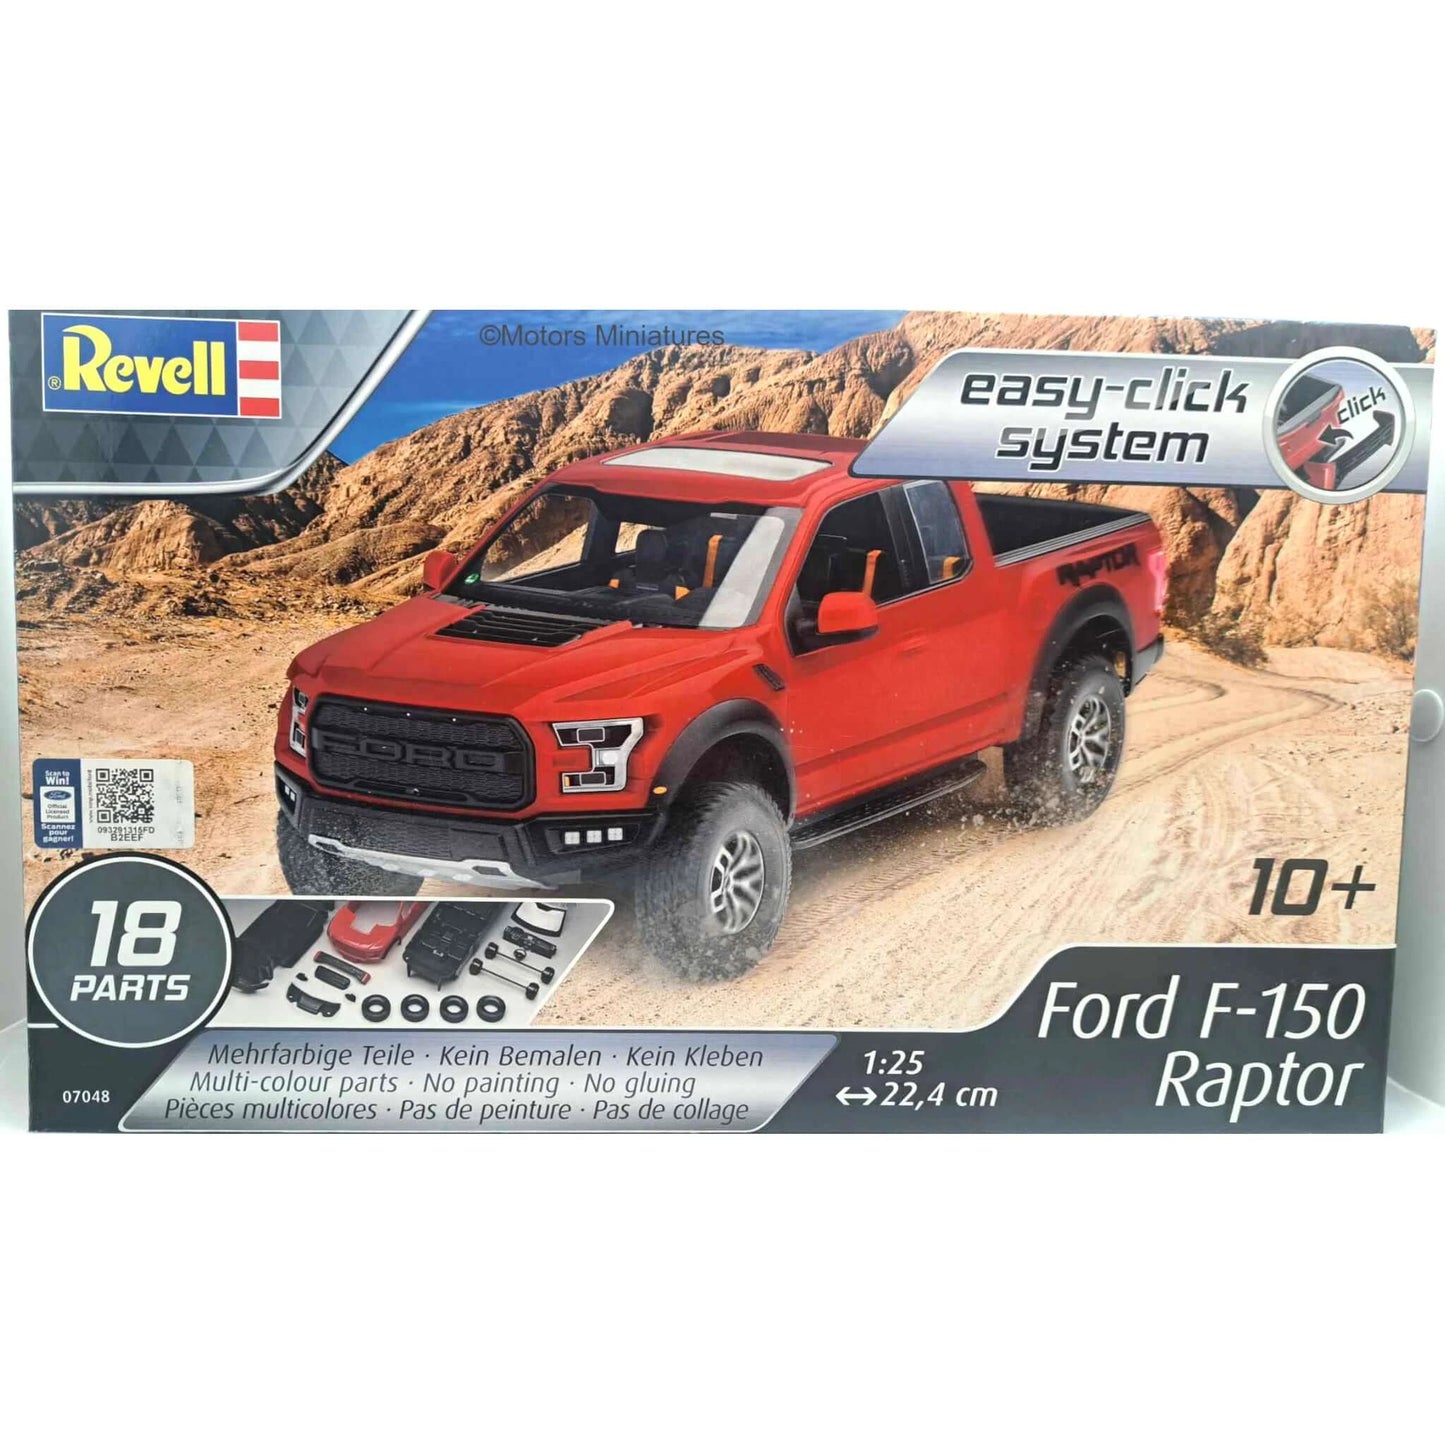 Ford F150 Raptor Modelkit Easy Click Revell 1/25 | Motors Miniatures